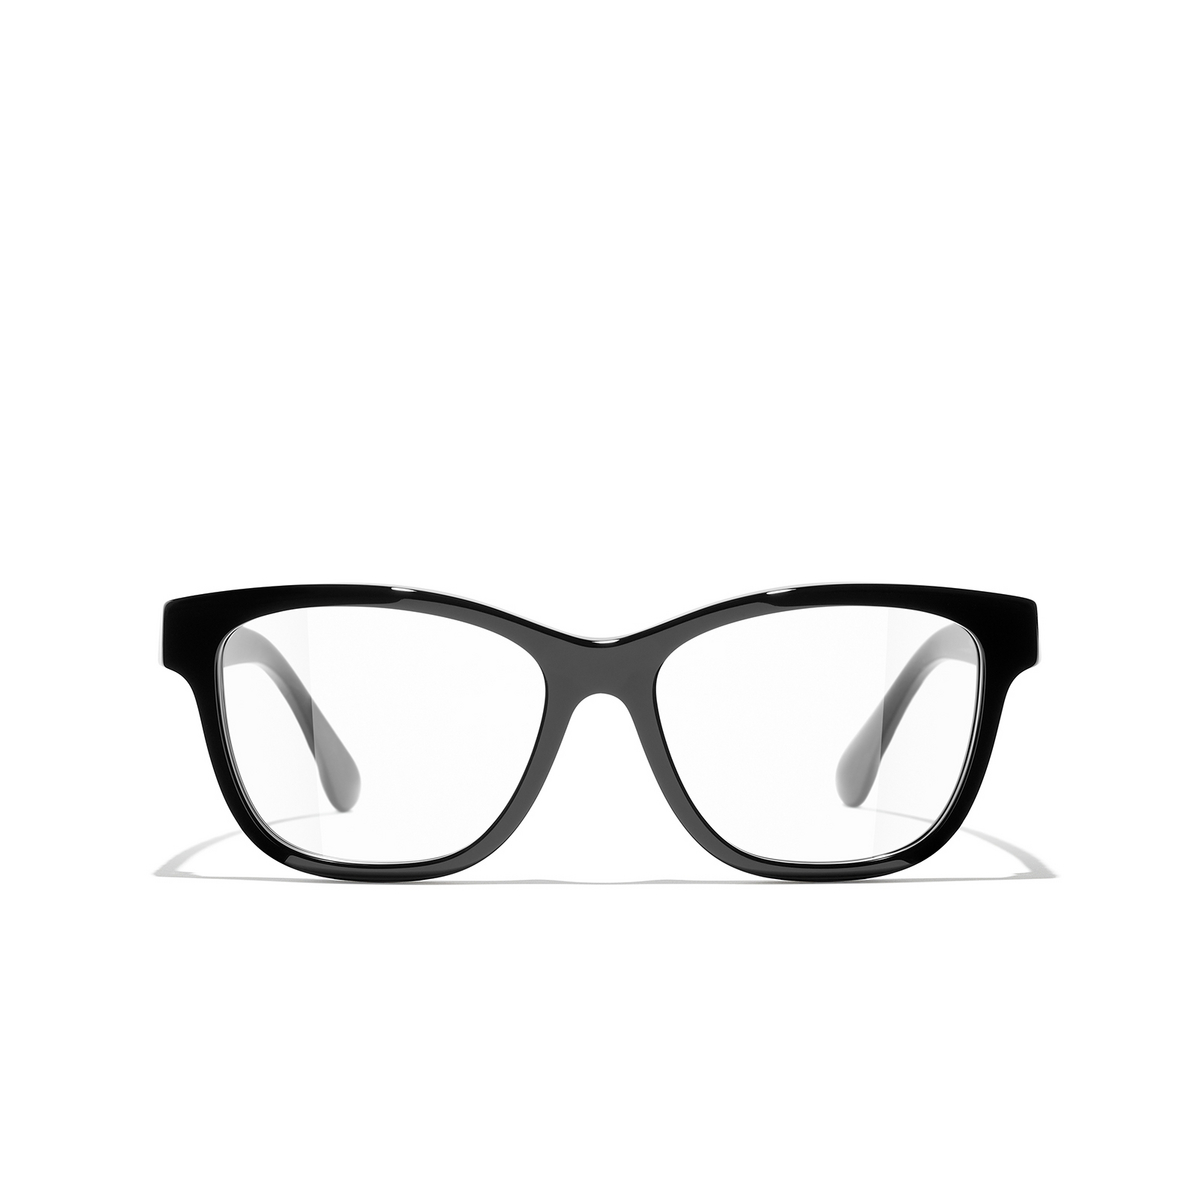 CHANEL square Eyeglasses C760 Black & White - front view